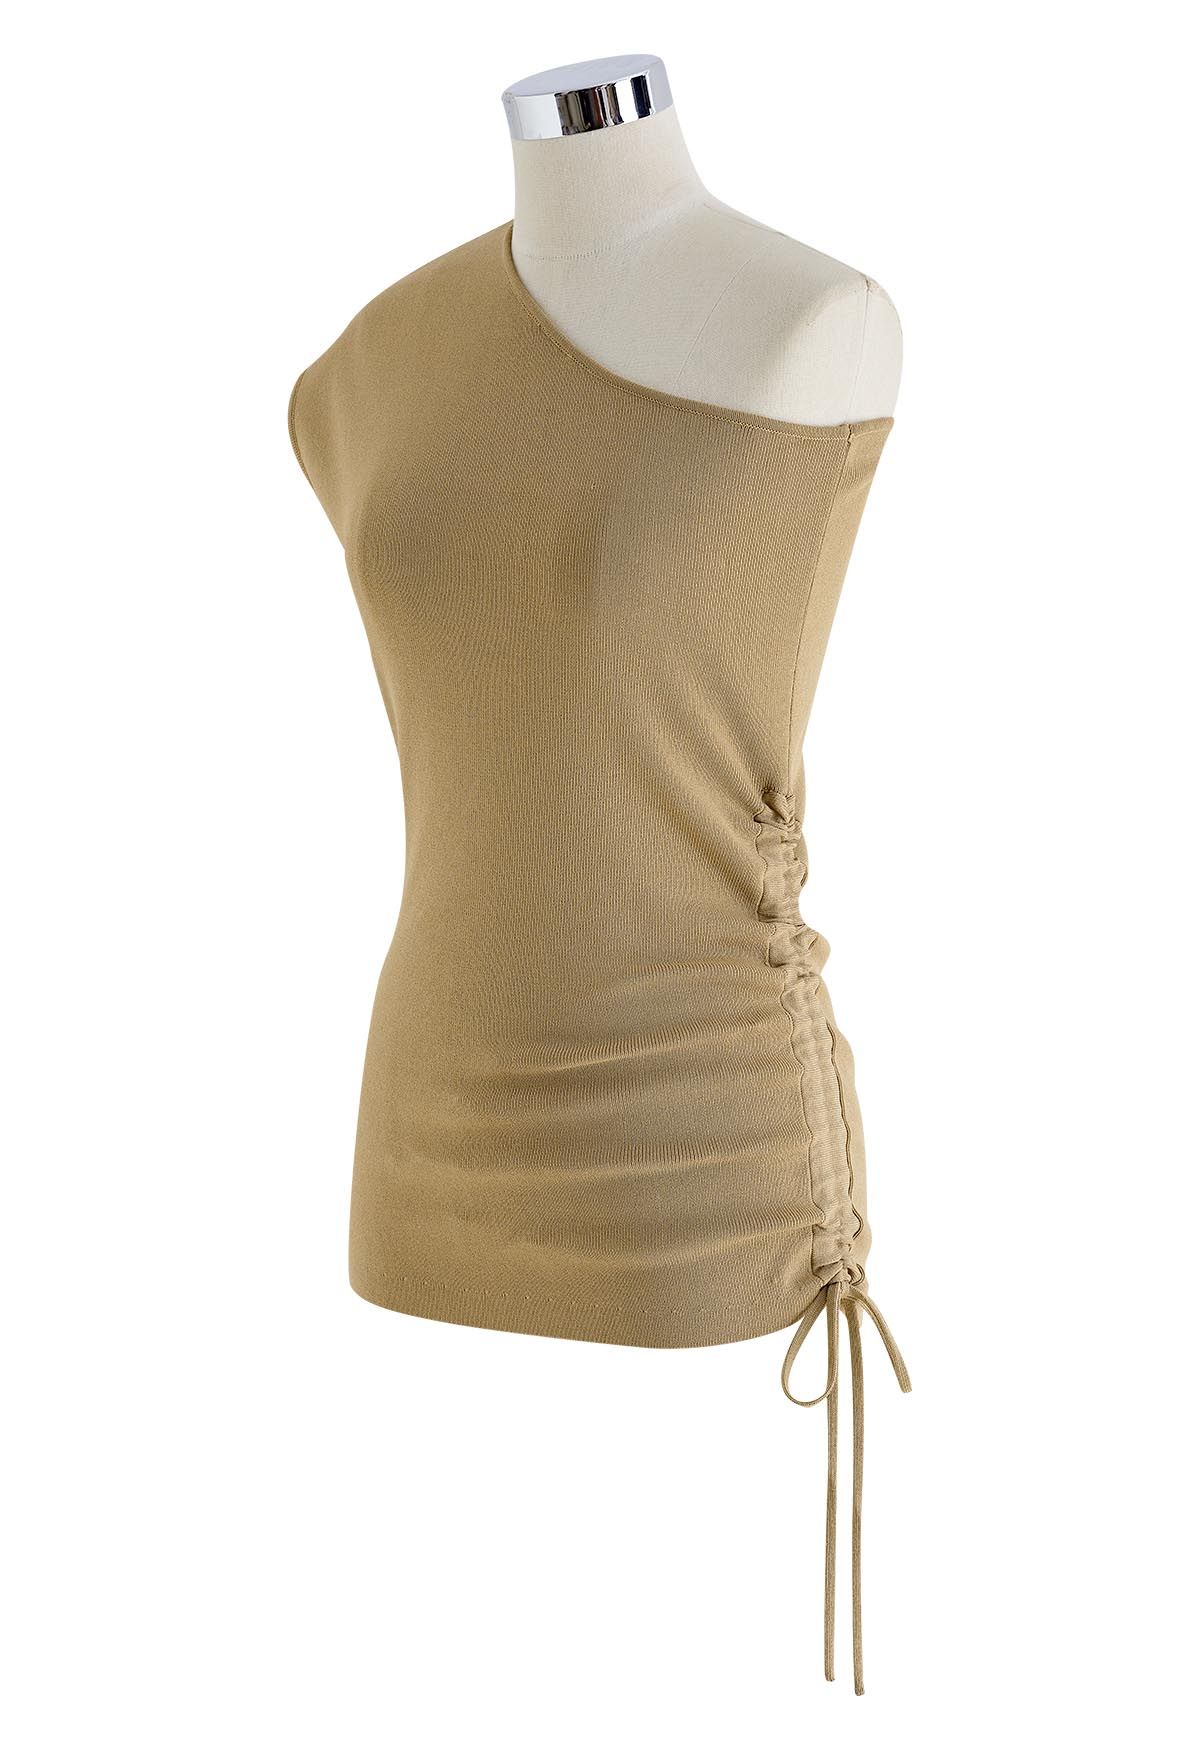 One-Shoulder Side Drawstring Knit Top in Tan